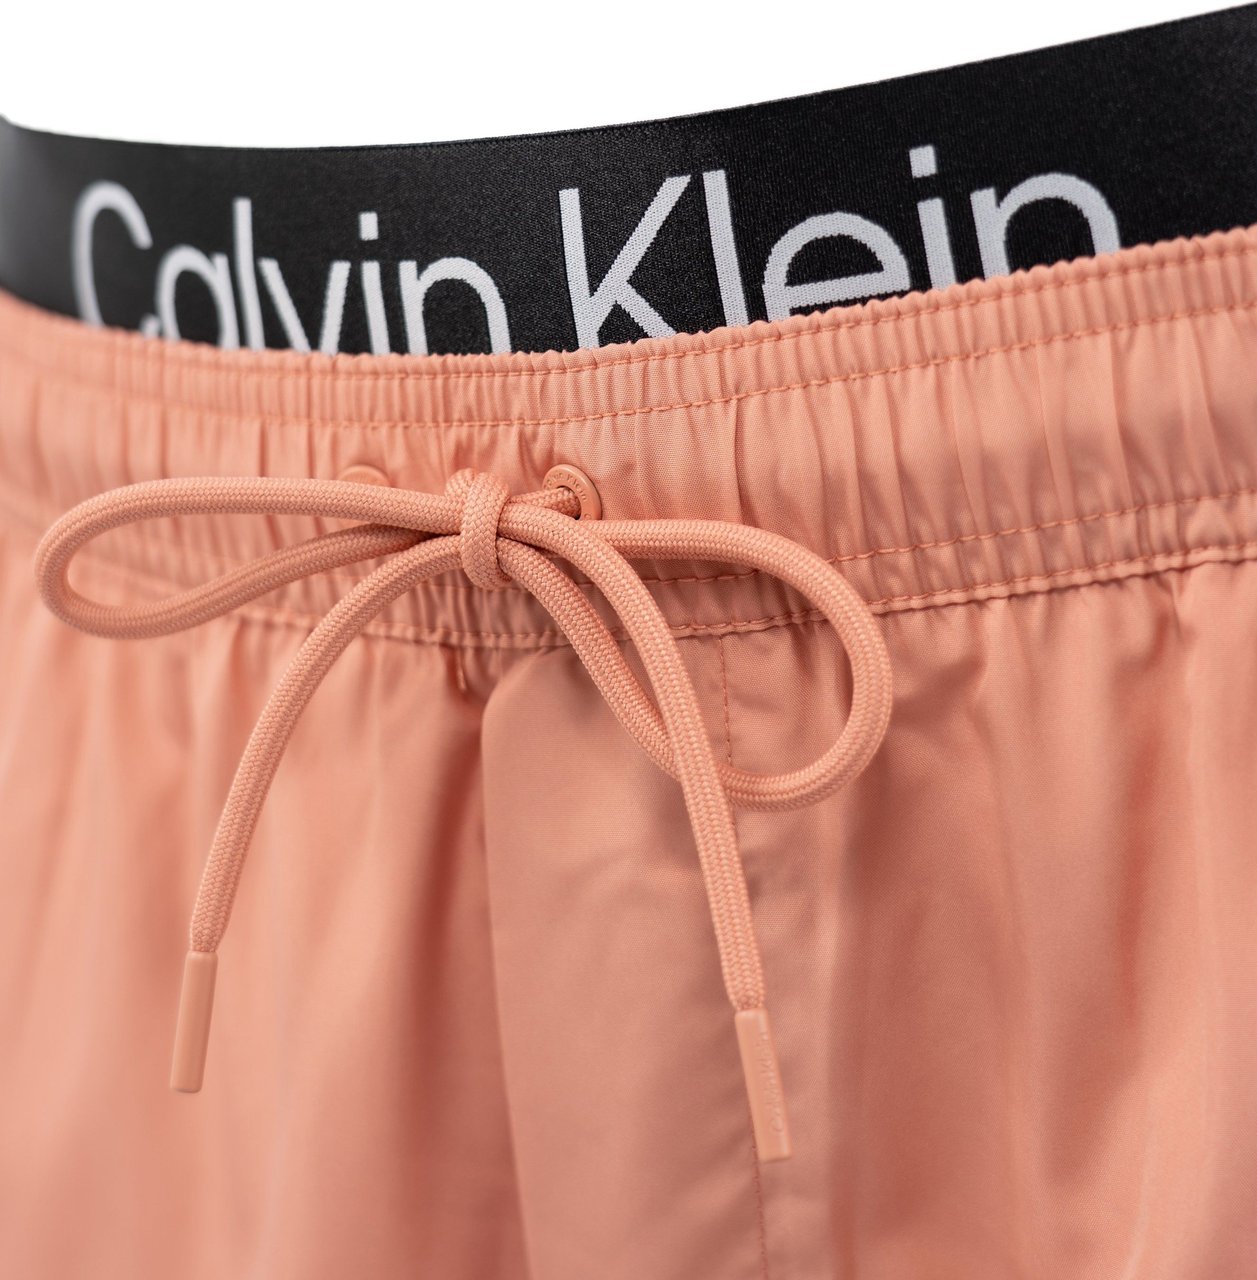 Calvin Klein Zwembroek Oranje